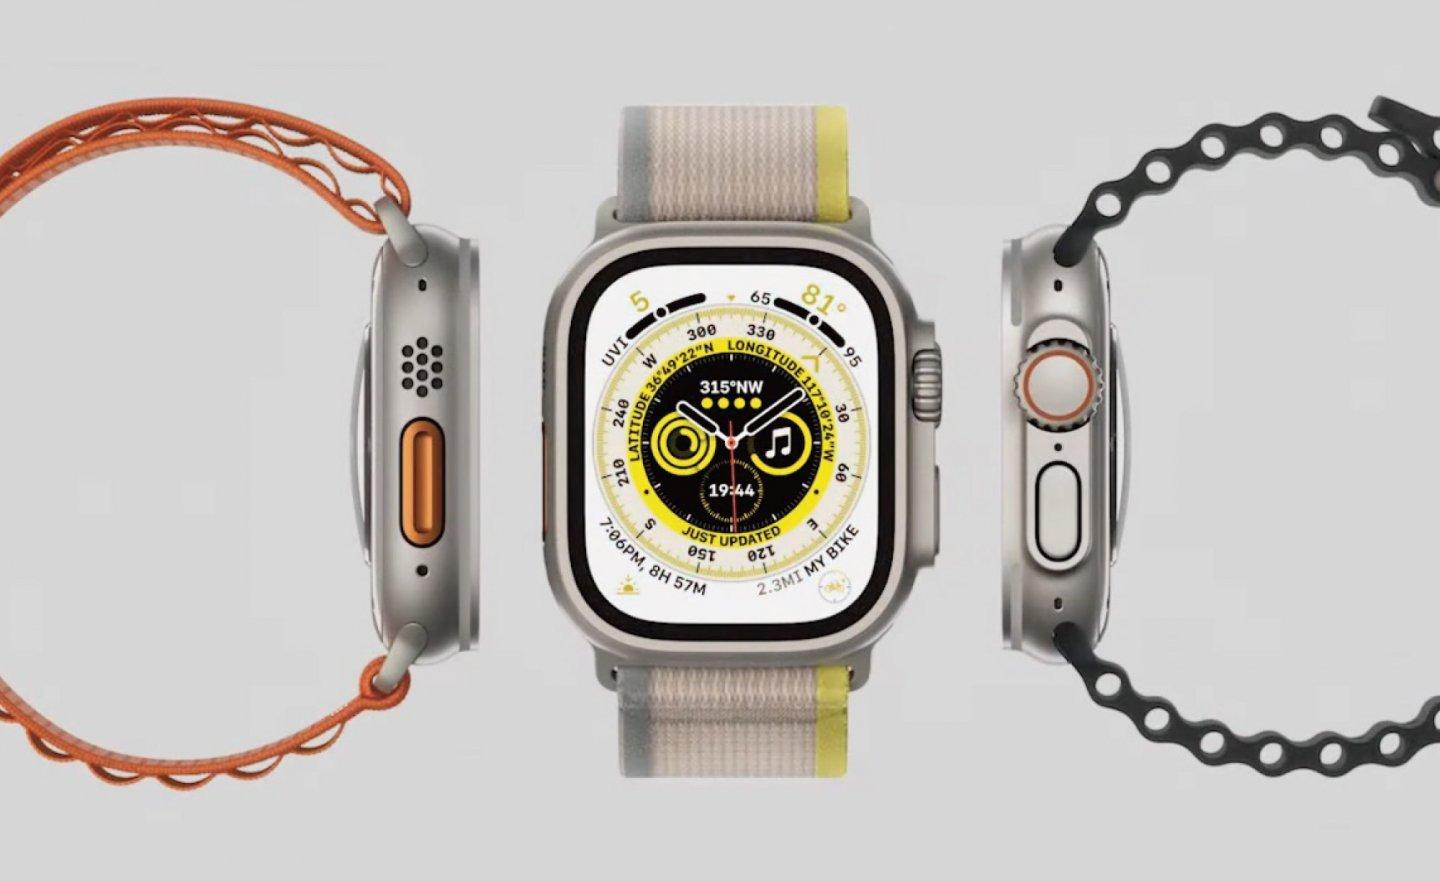 Garmin 嗆 Apple Watch Ultra！我們的手錶續航力是以「月」為單位